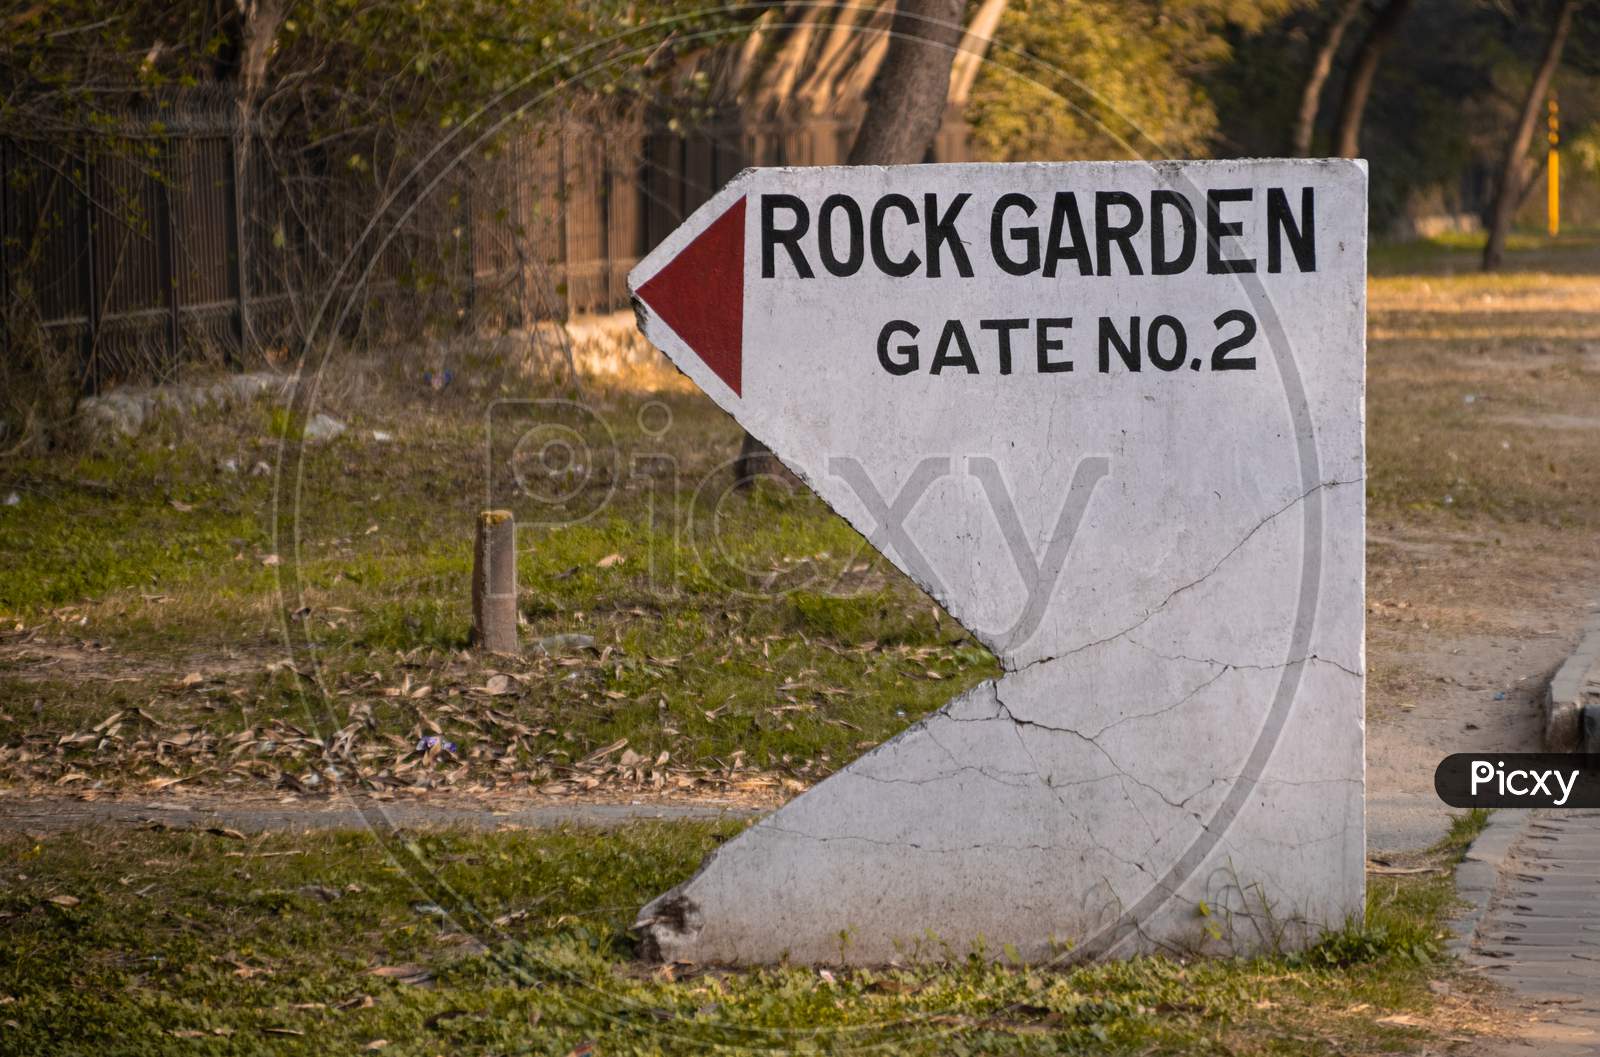 Sign board for Rock garden chandigarh